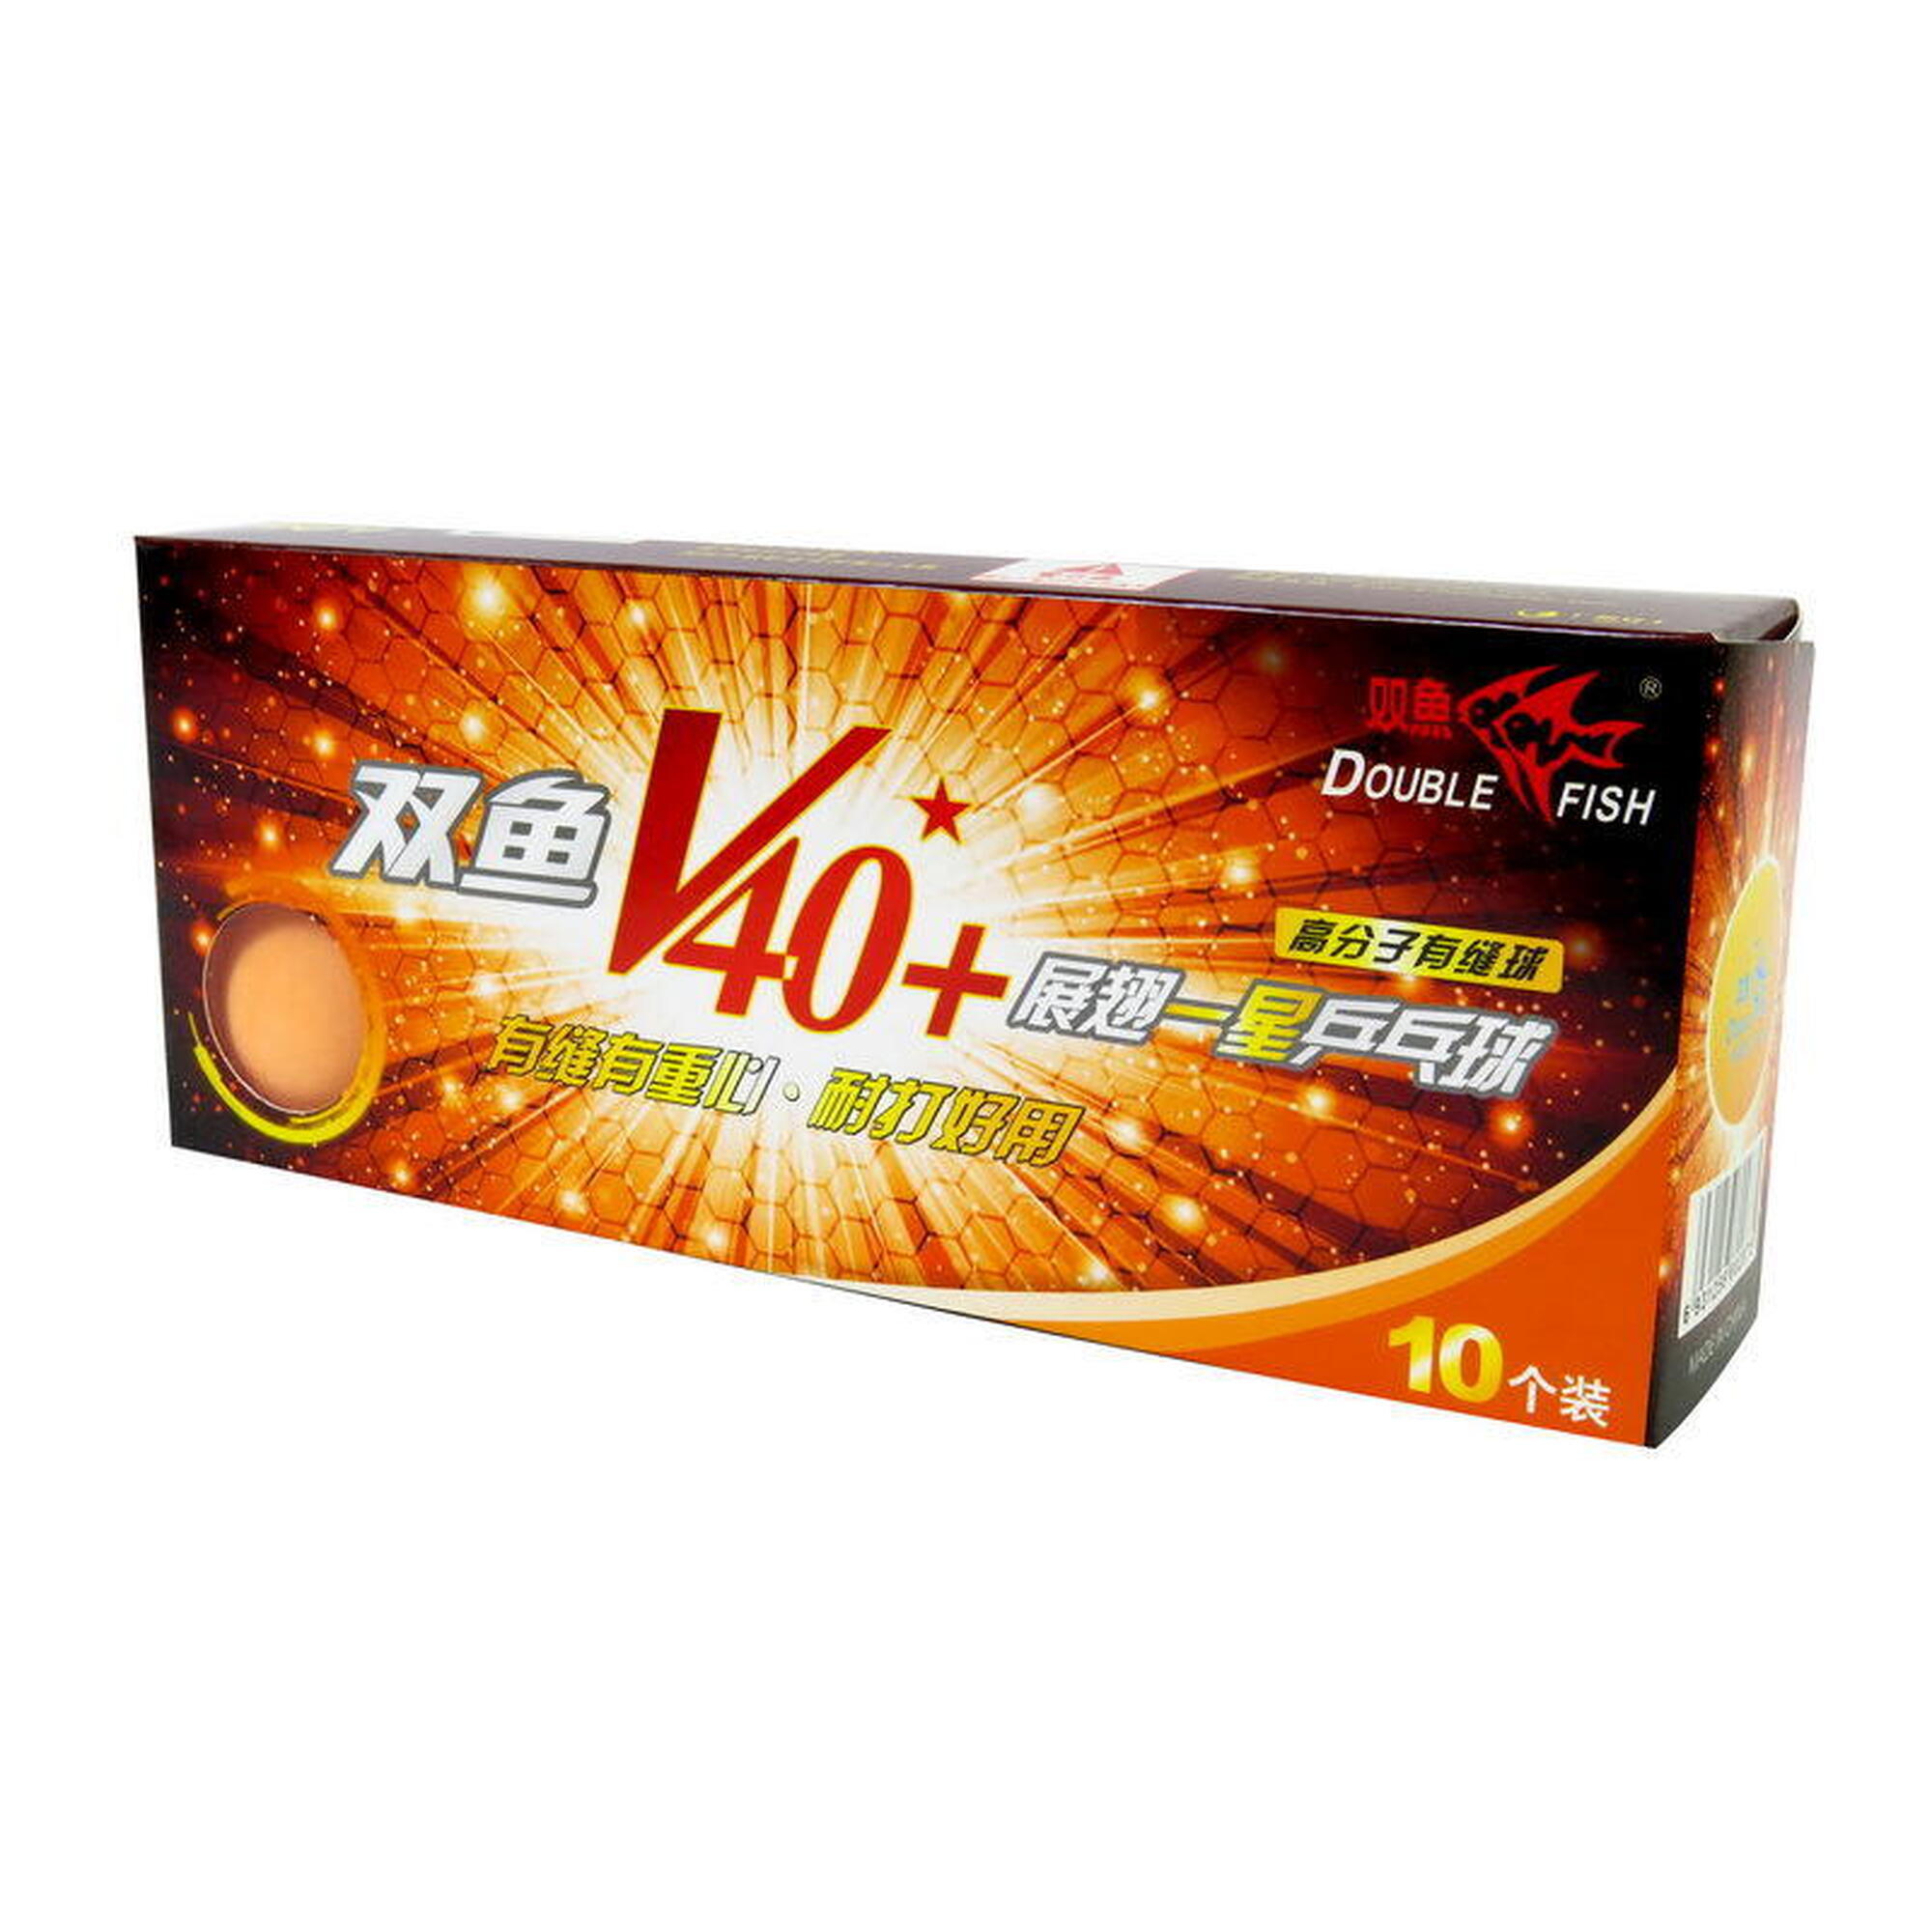 V40+ 1-Star Table Tennis Ball  (10 pcs/box) - Orange